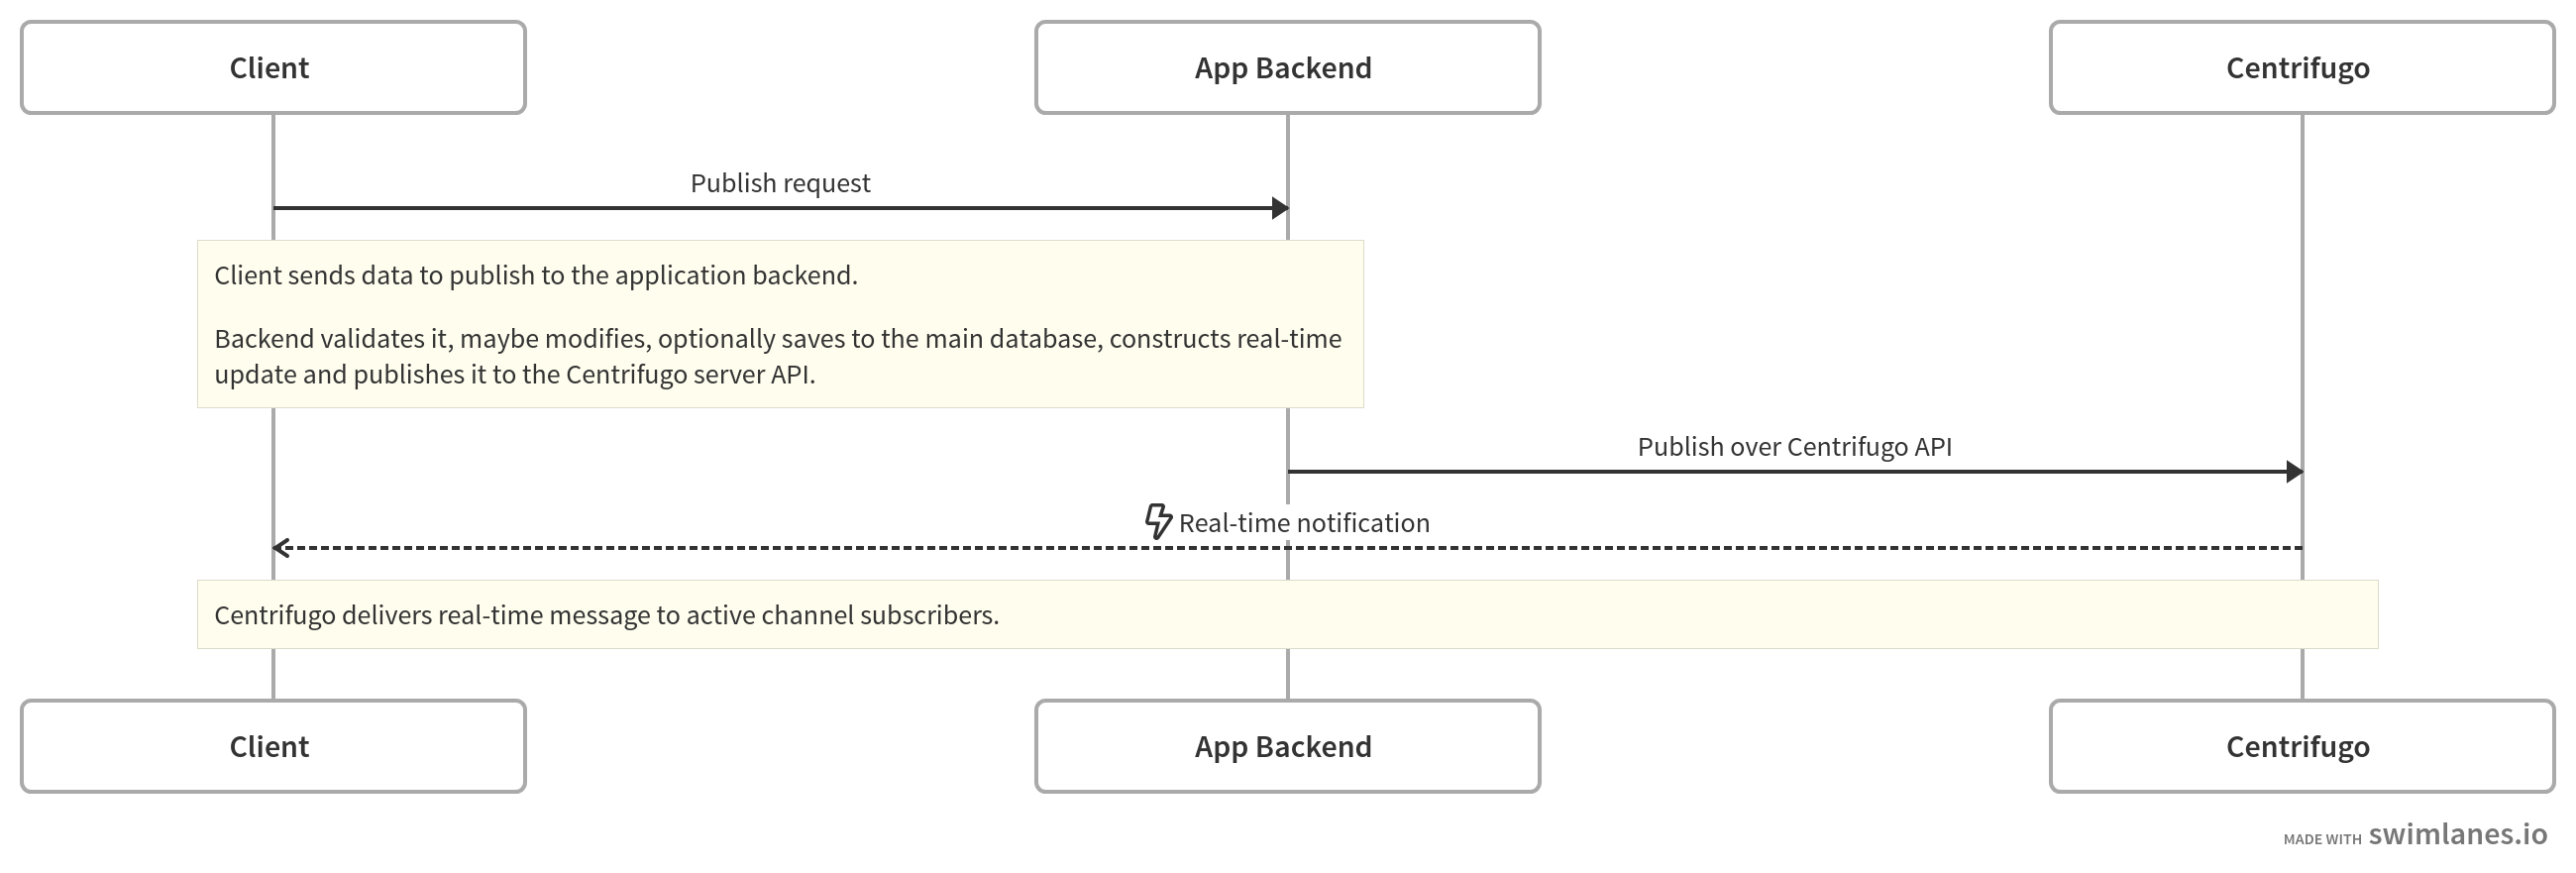 diagram_unidirectional_publish